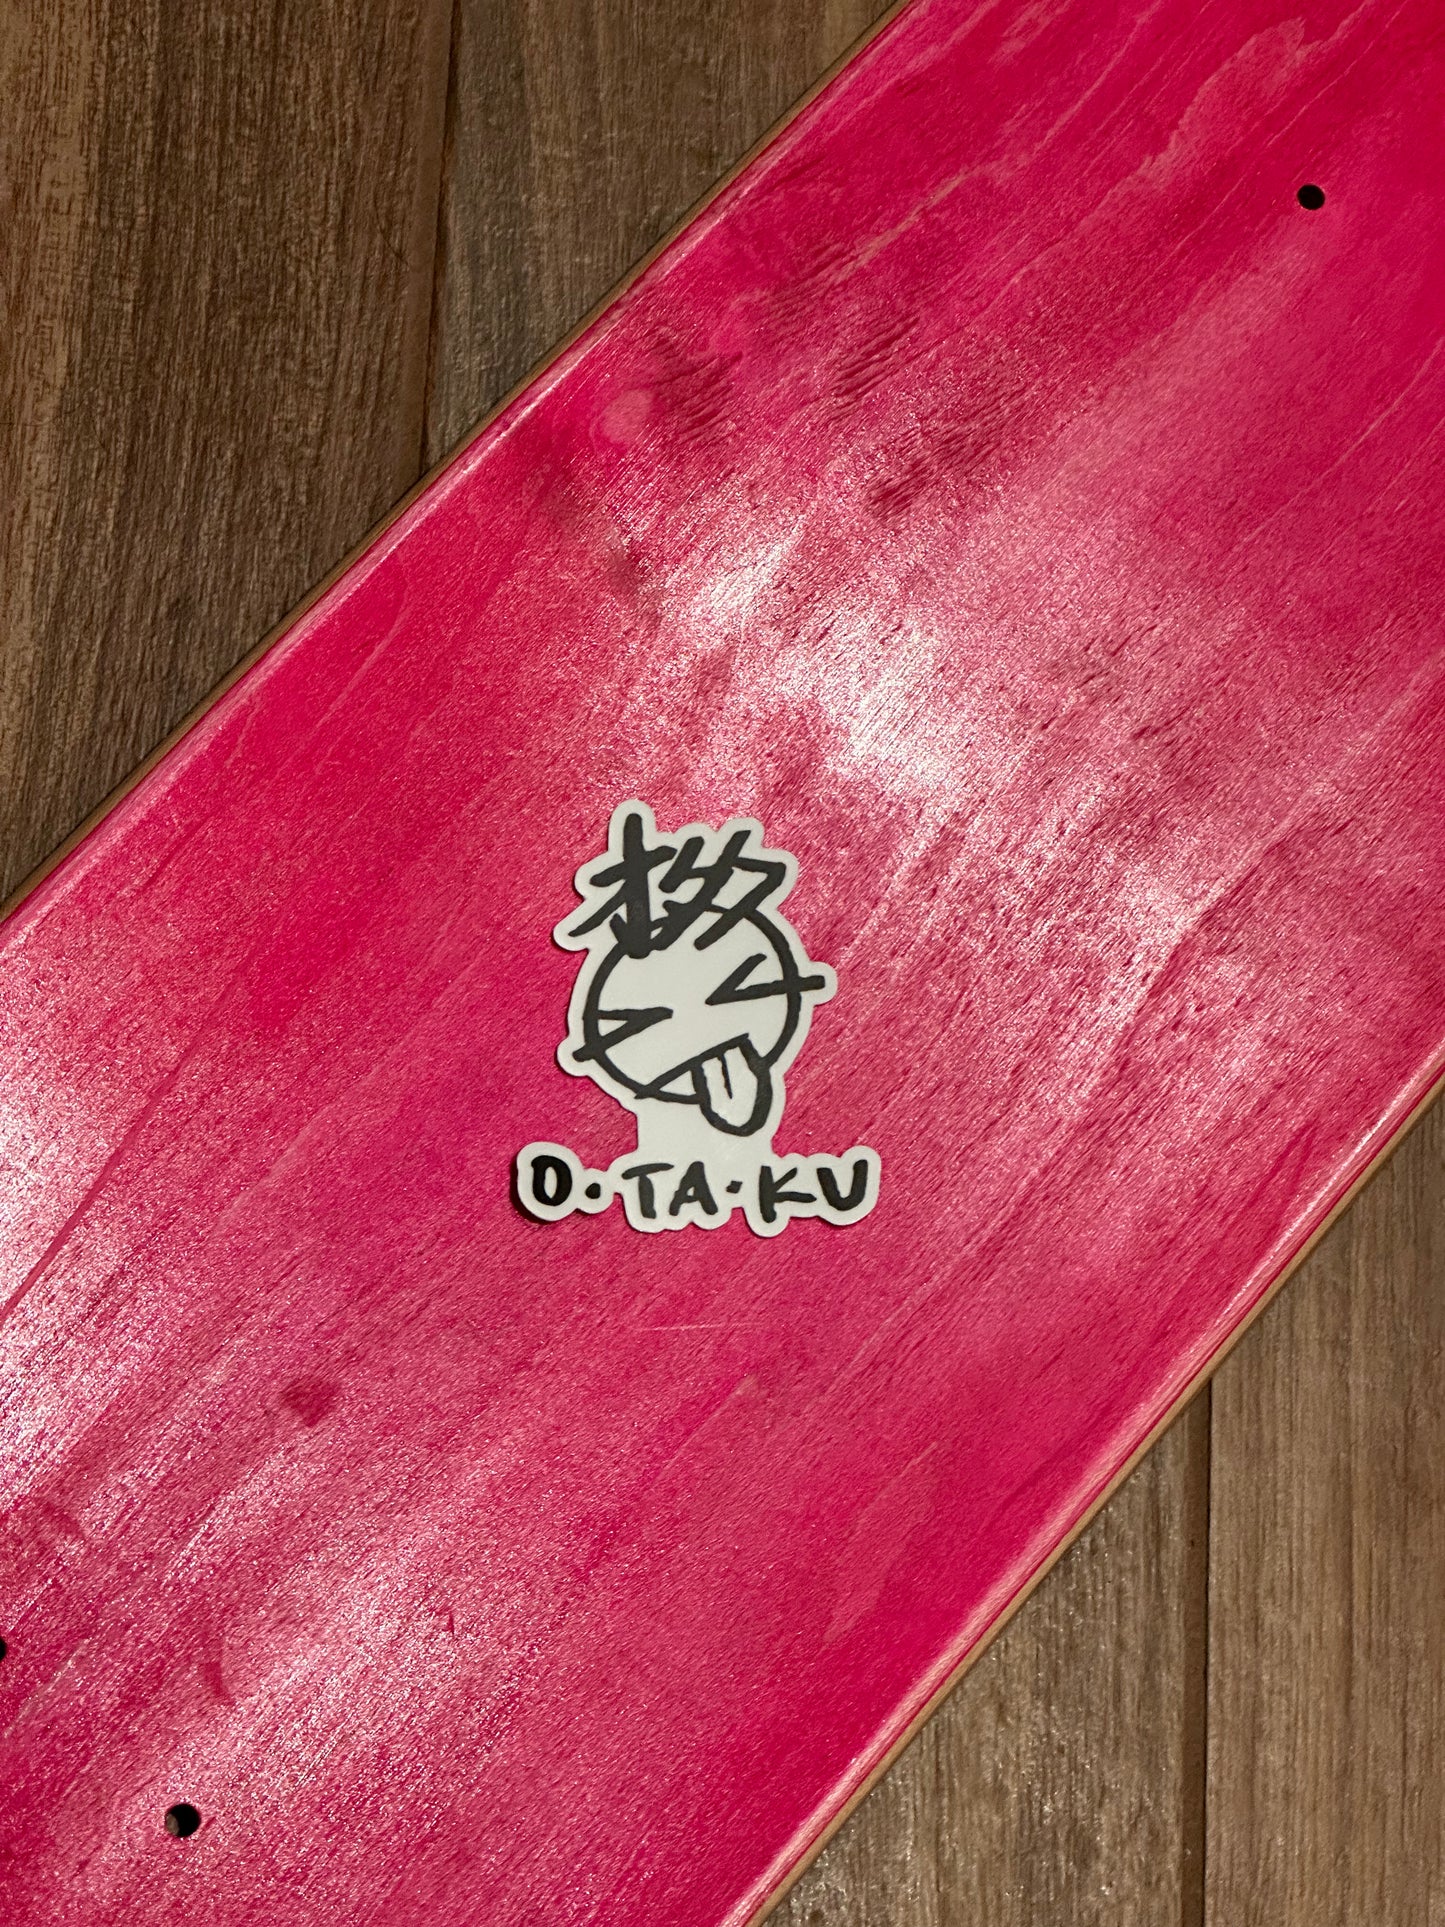 O-TA-KU Sticker